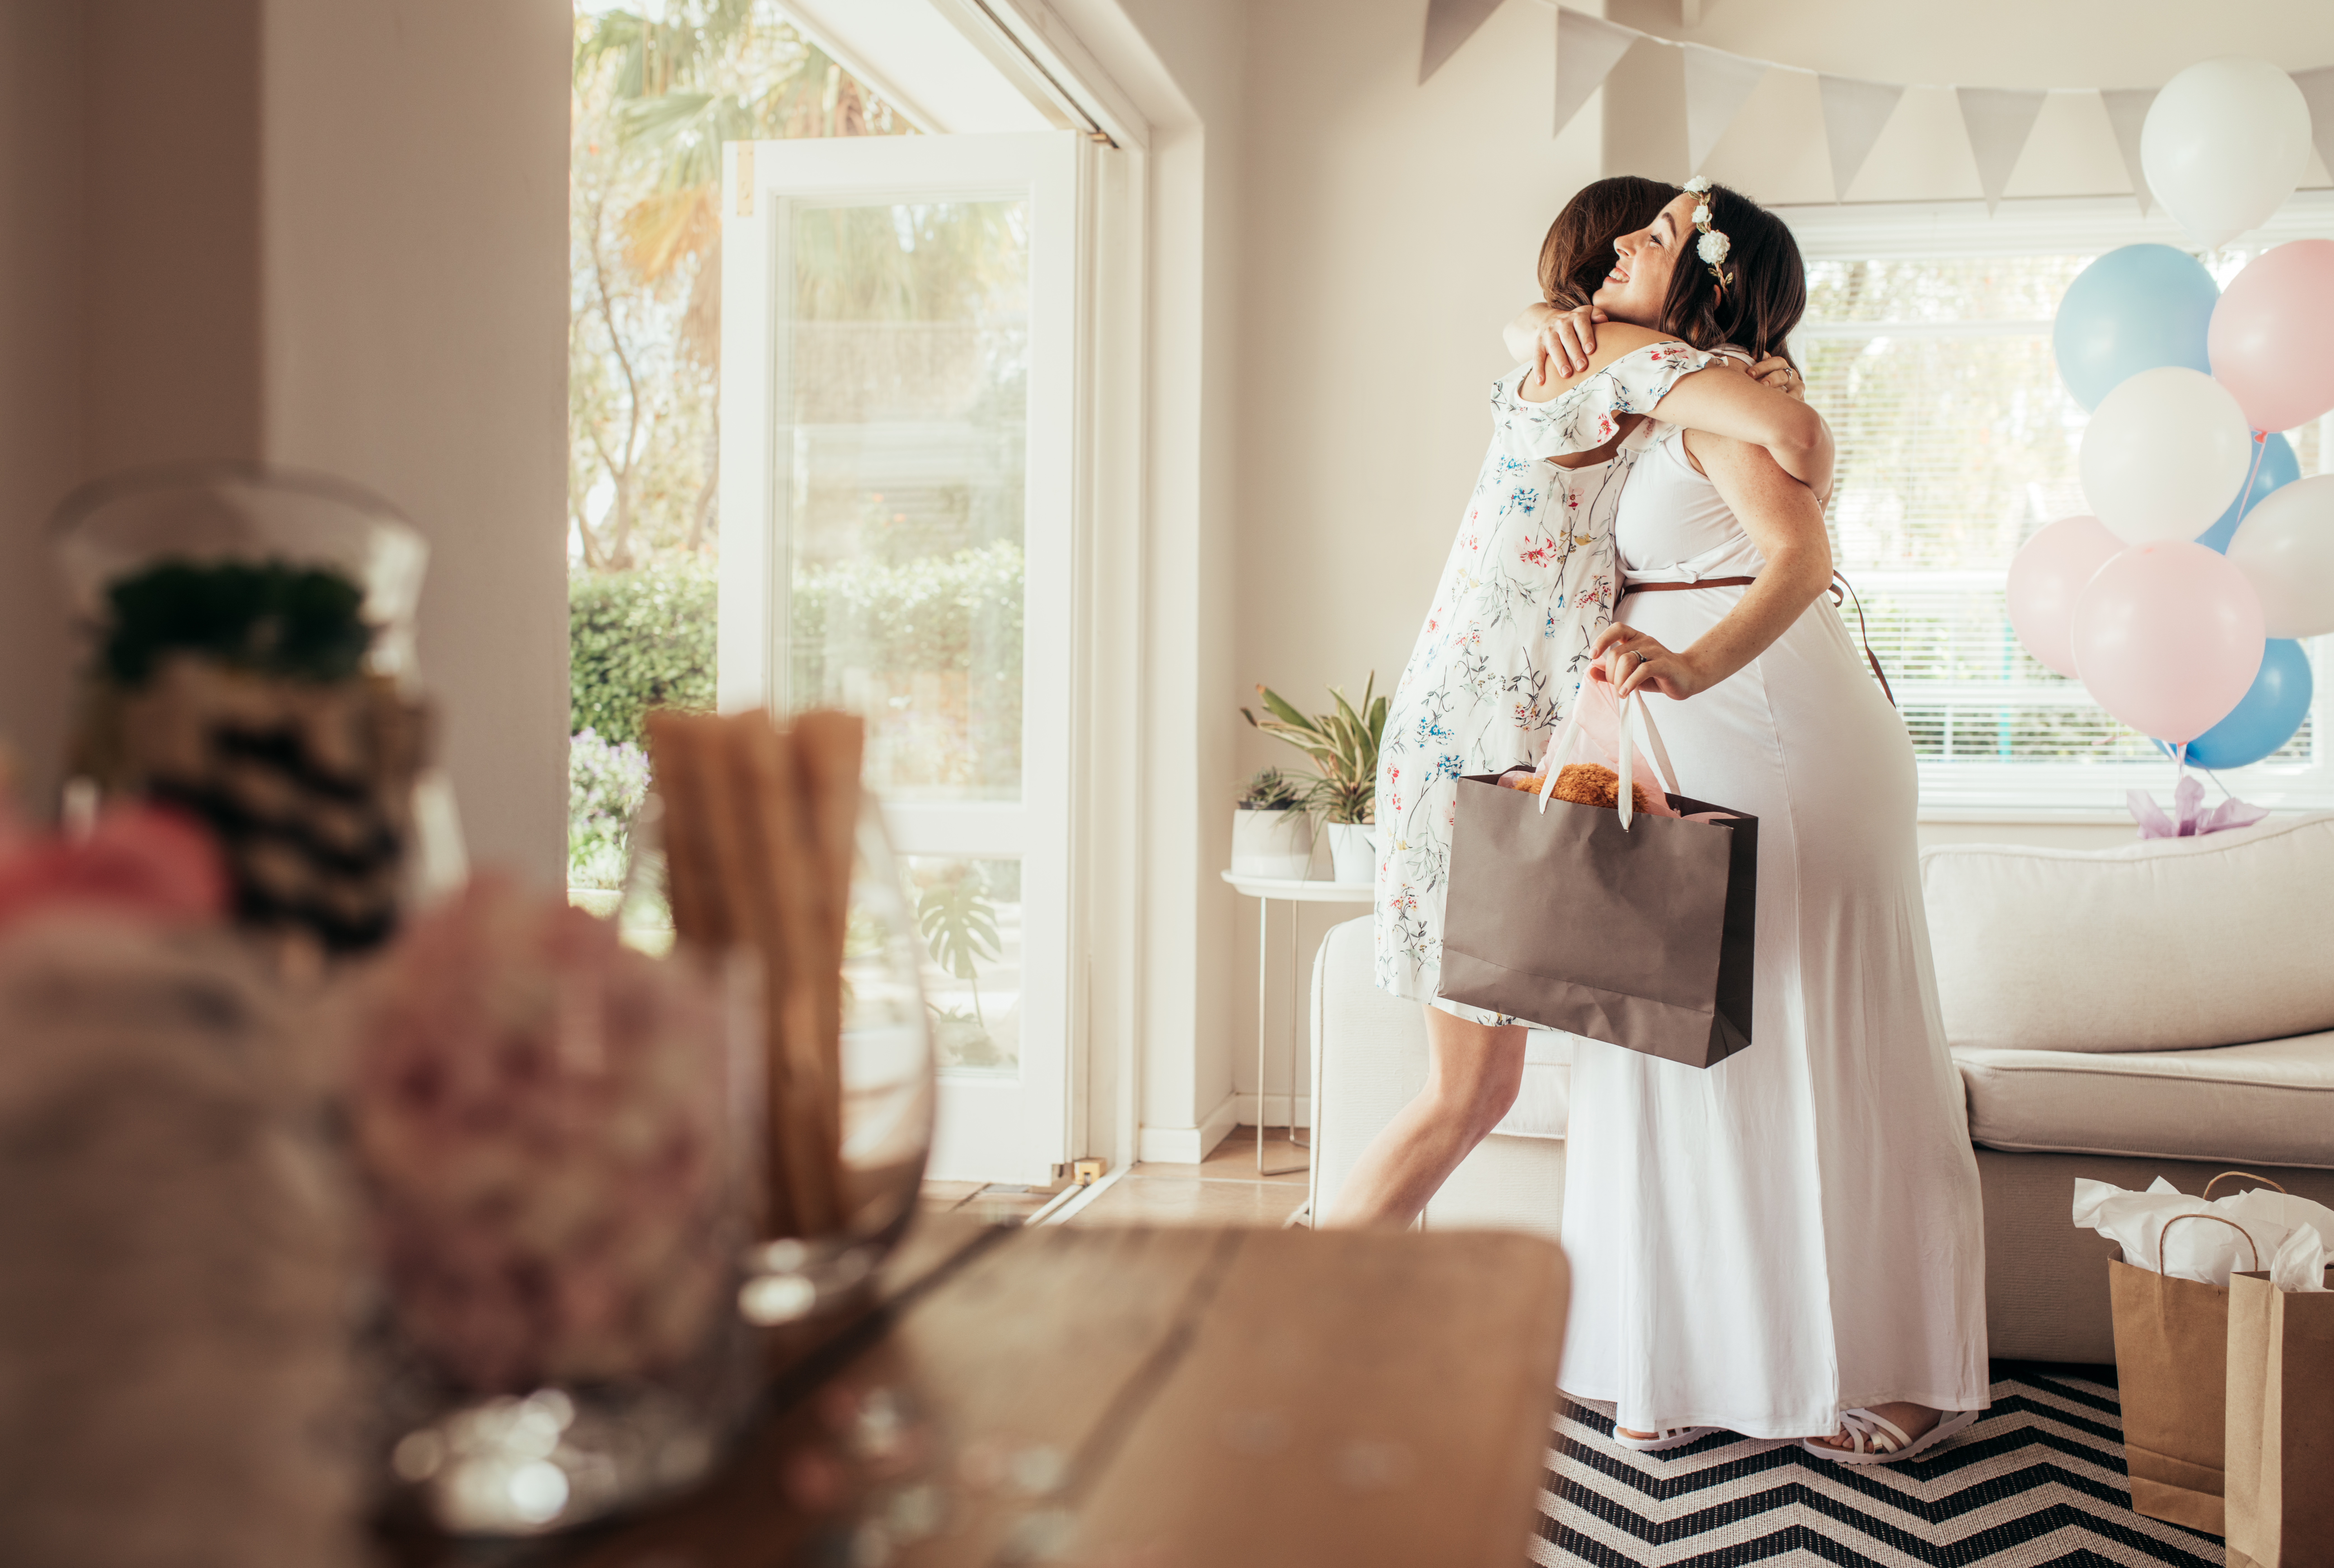 Mujeres se abrazan | Foto: Shutterstock